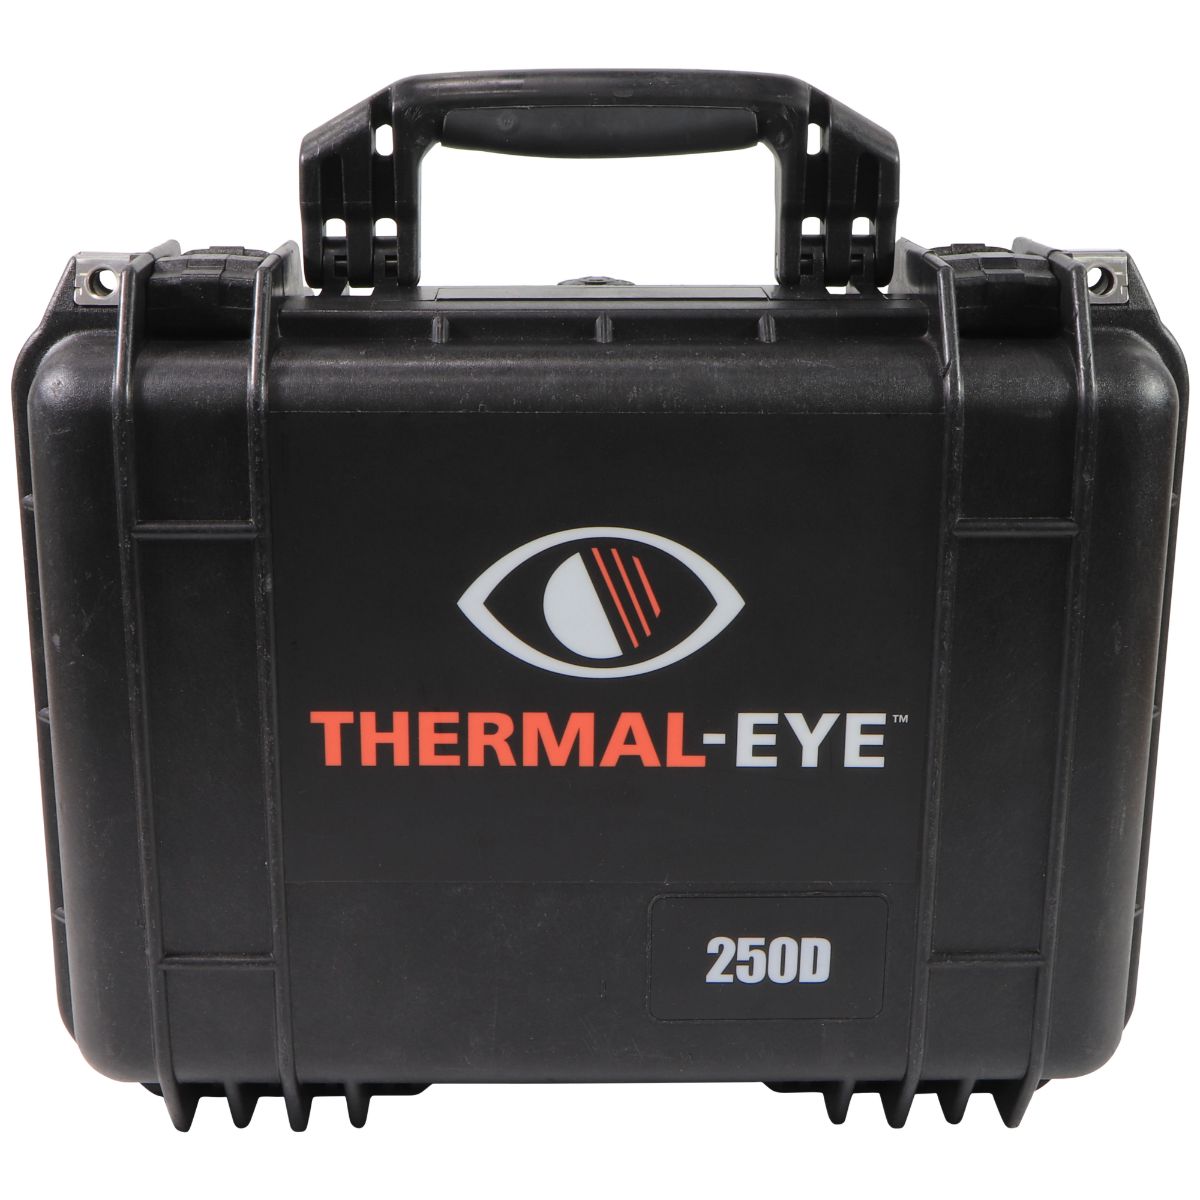 Thermal-Eye 250D Thermal Imaging Digital Monocular - Black *READ DESC* Other Sporting Goods Thermal-Eye    - Simple Cell Bulk Wholesale Pricing - USA Seller